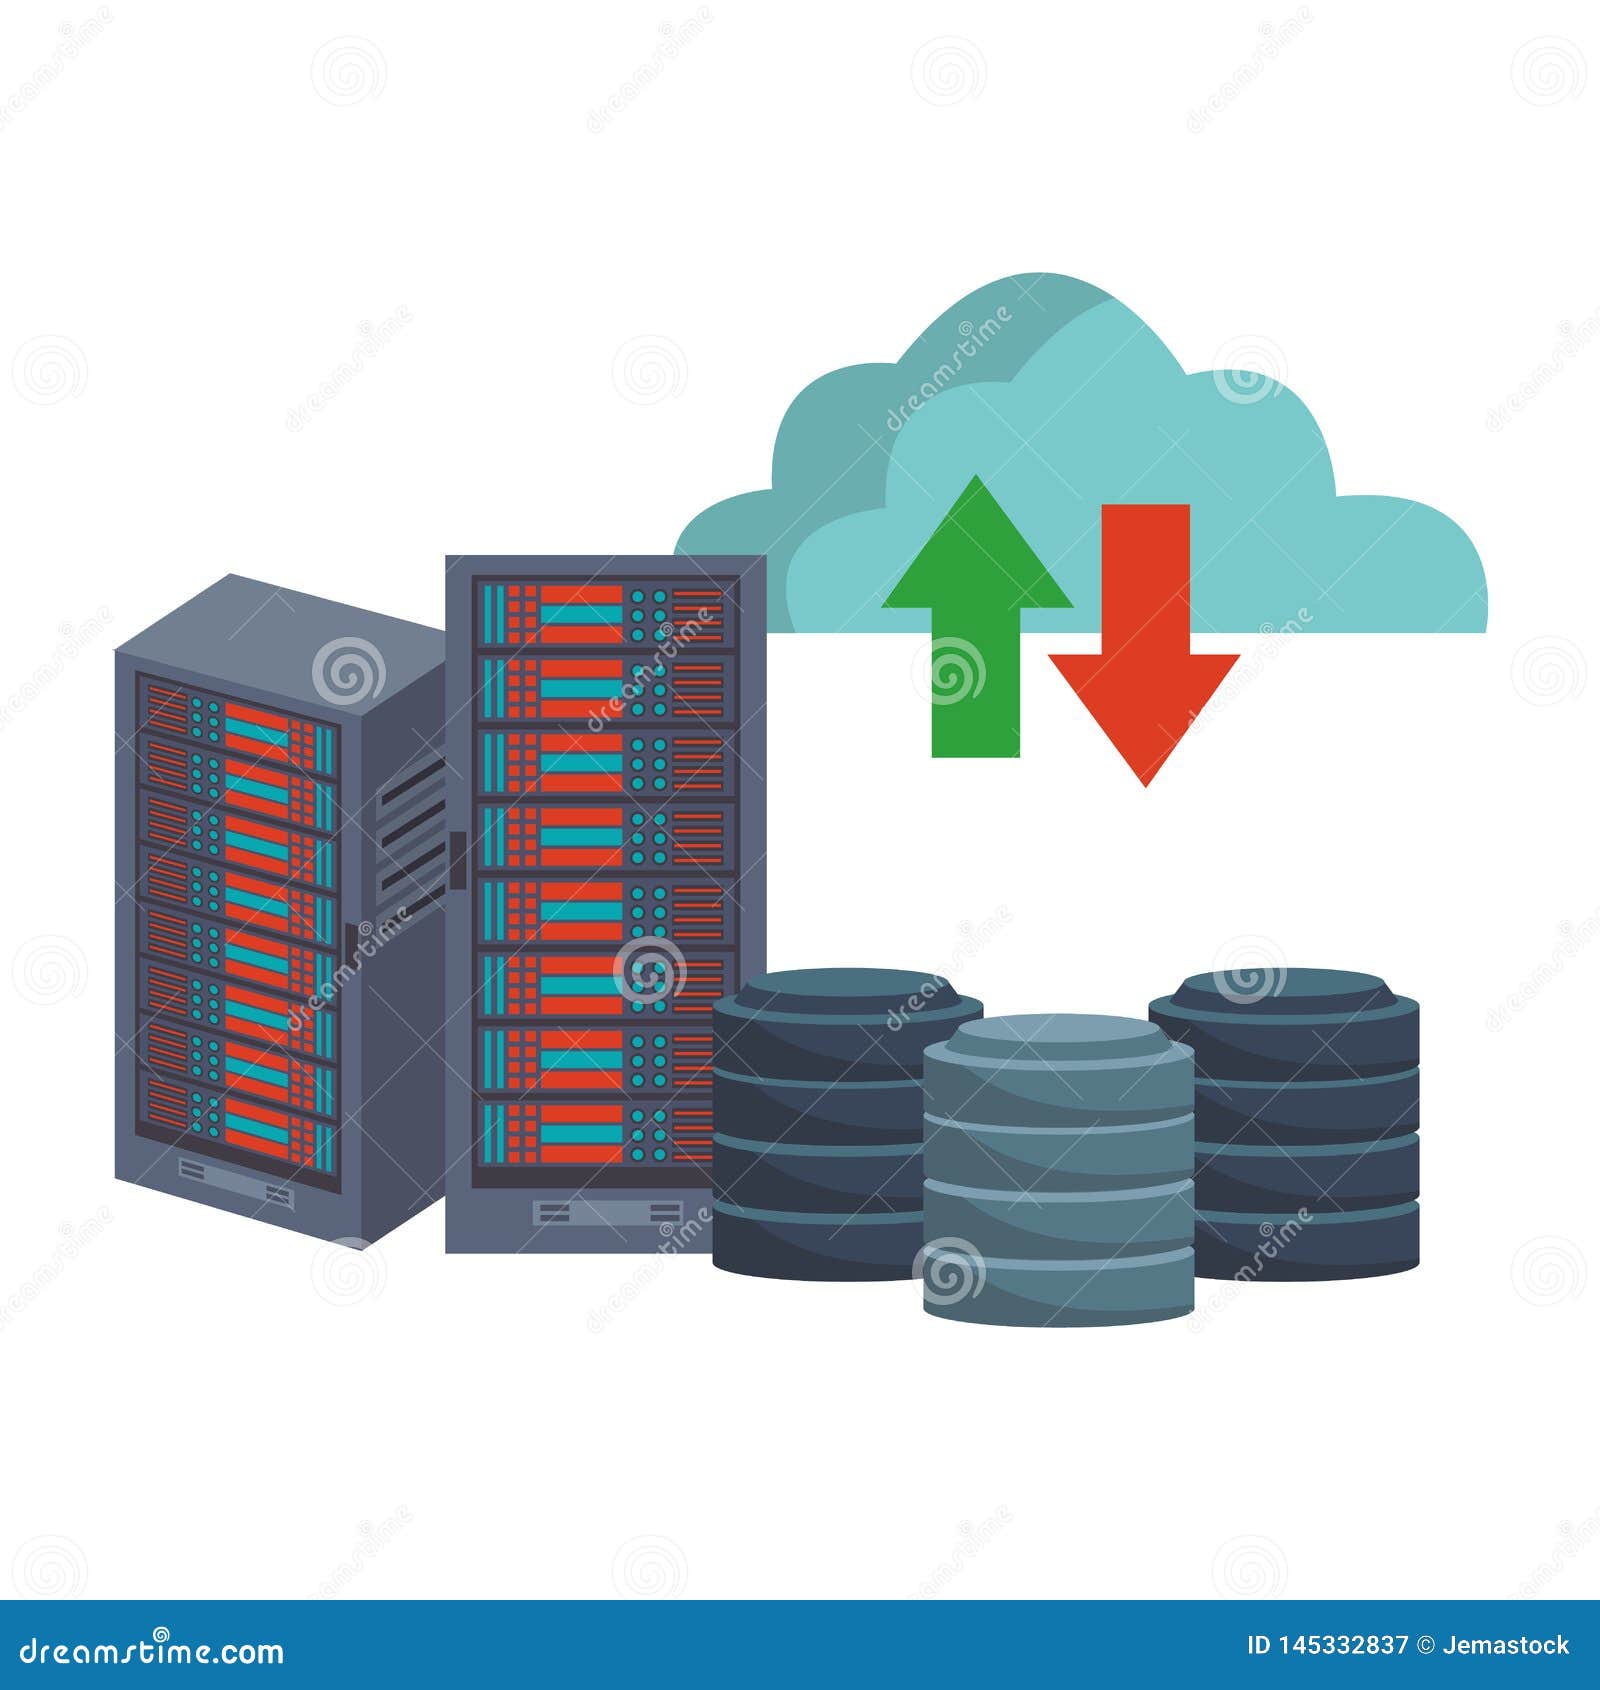 servers and cloud computing